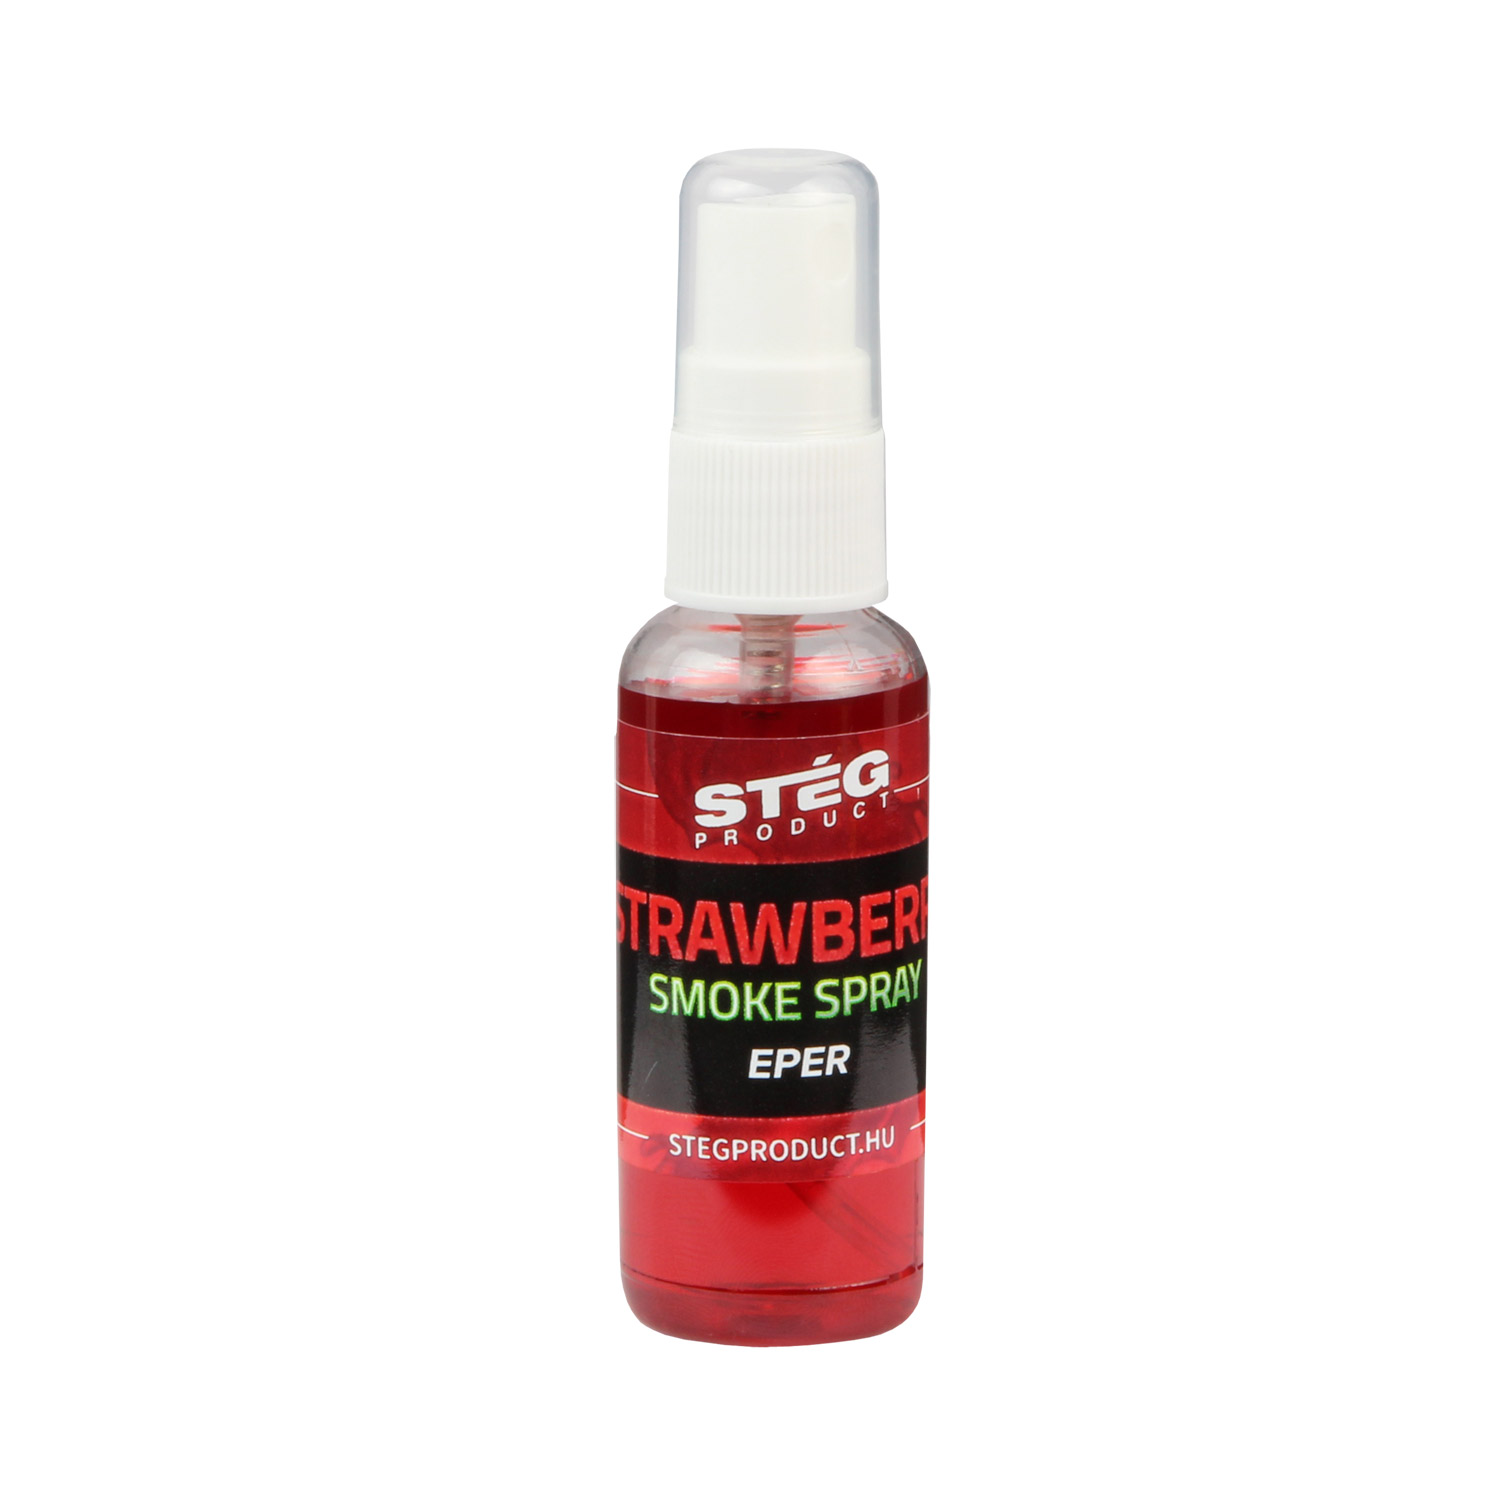 Stg Product Smoke Spray Strawberry 30ml